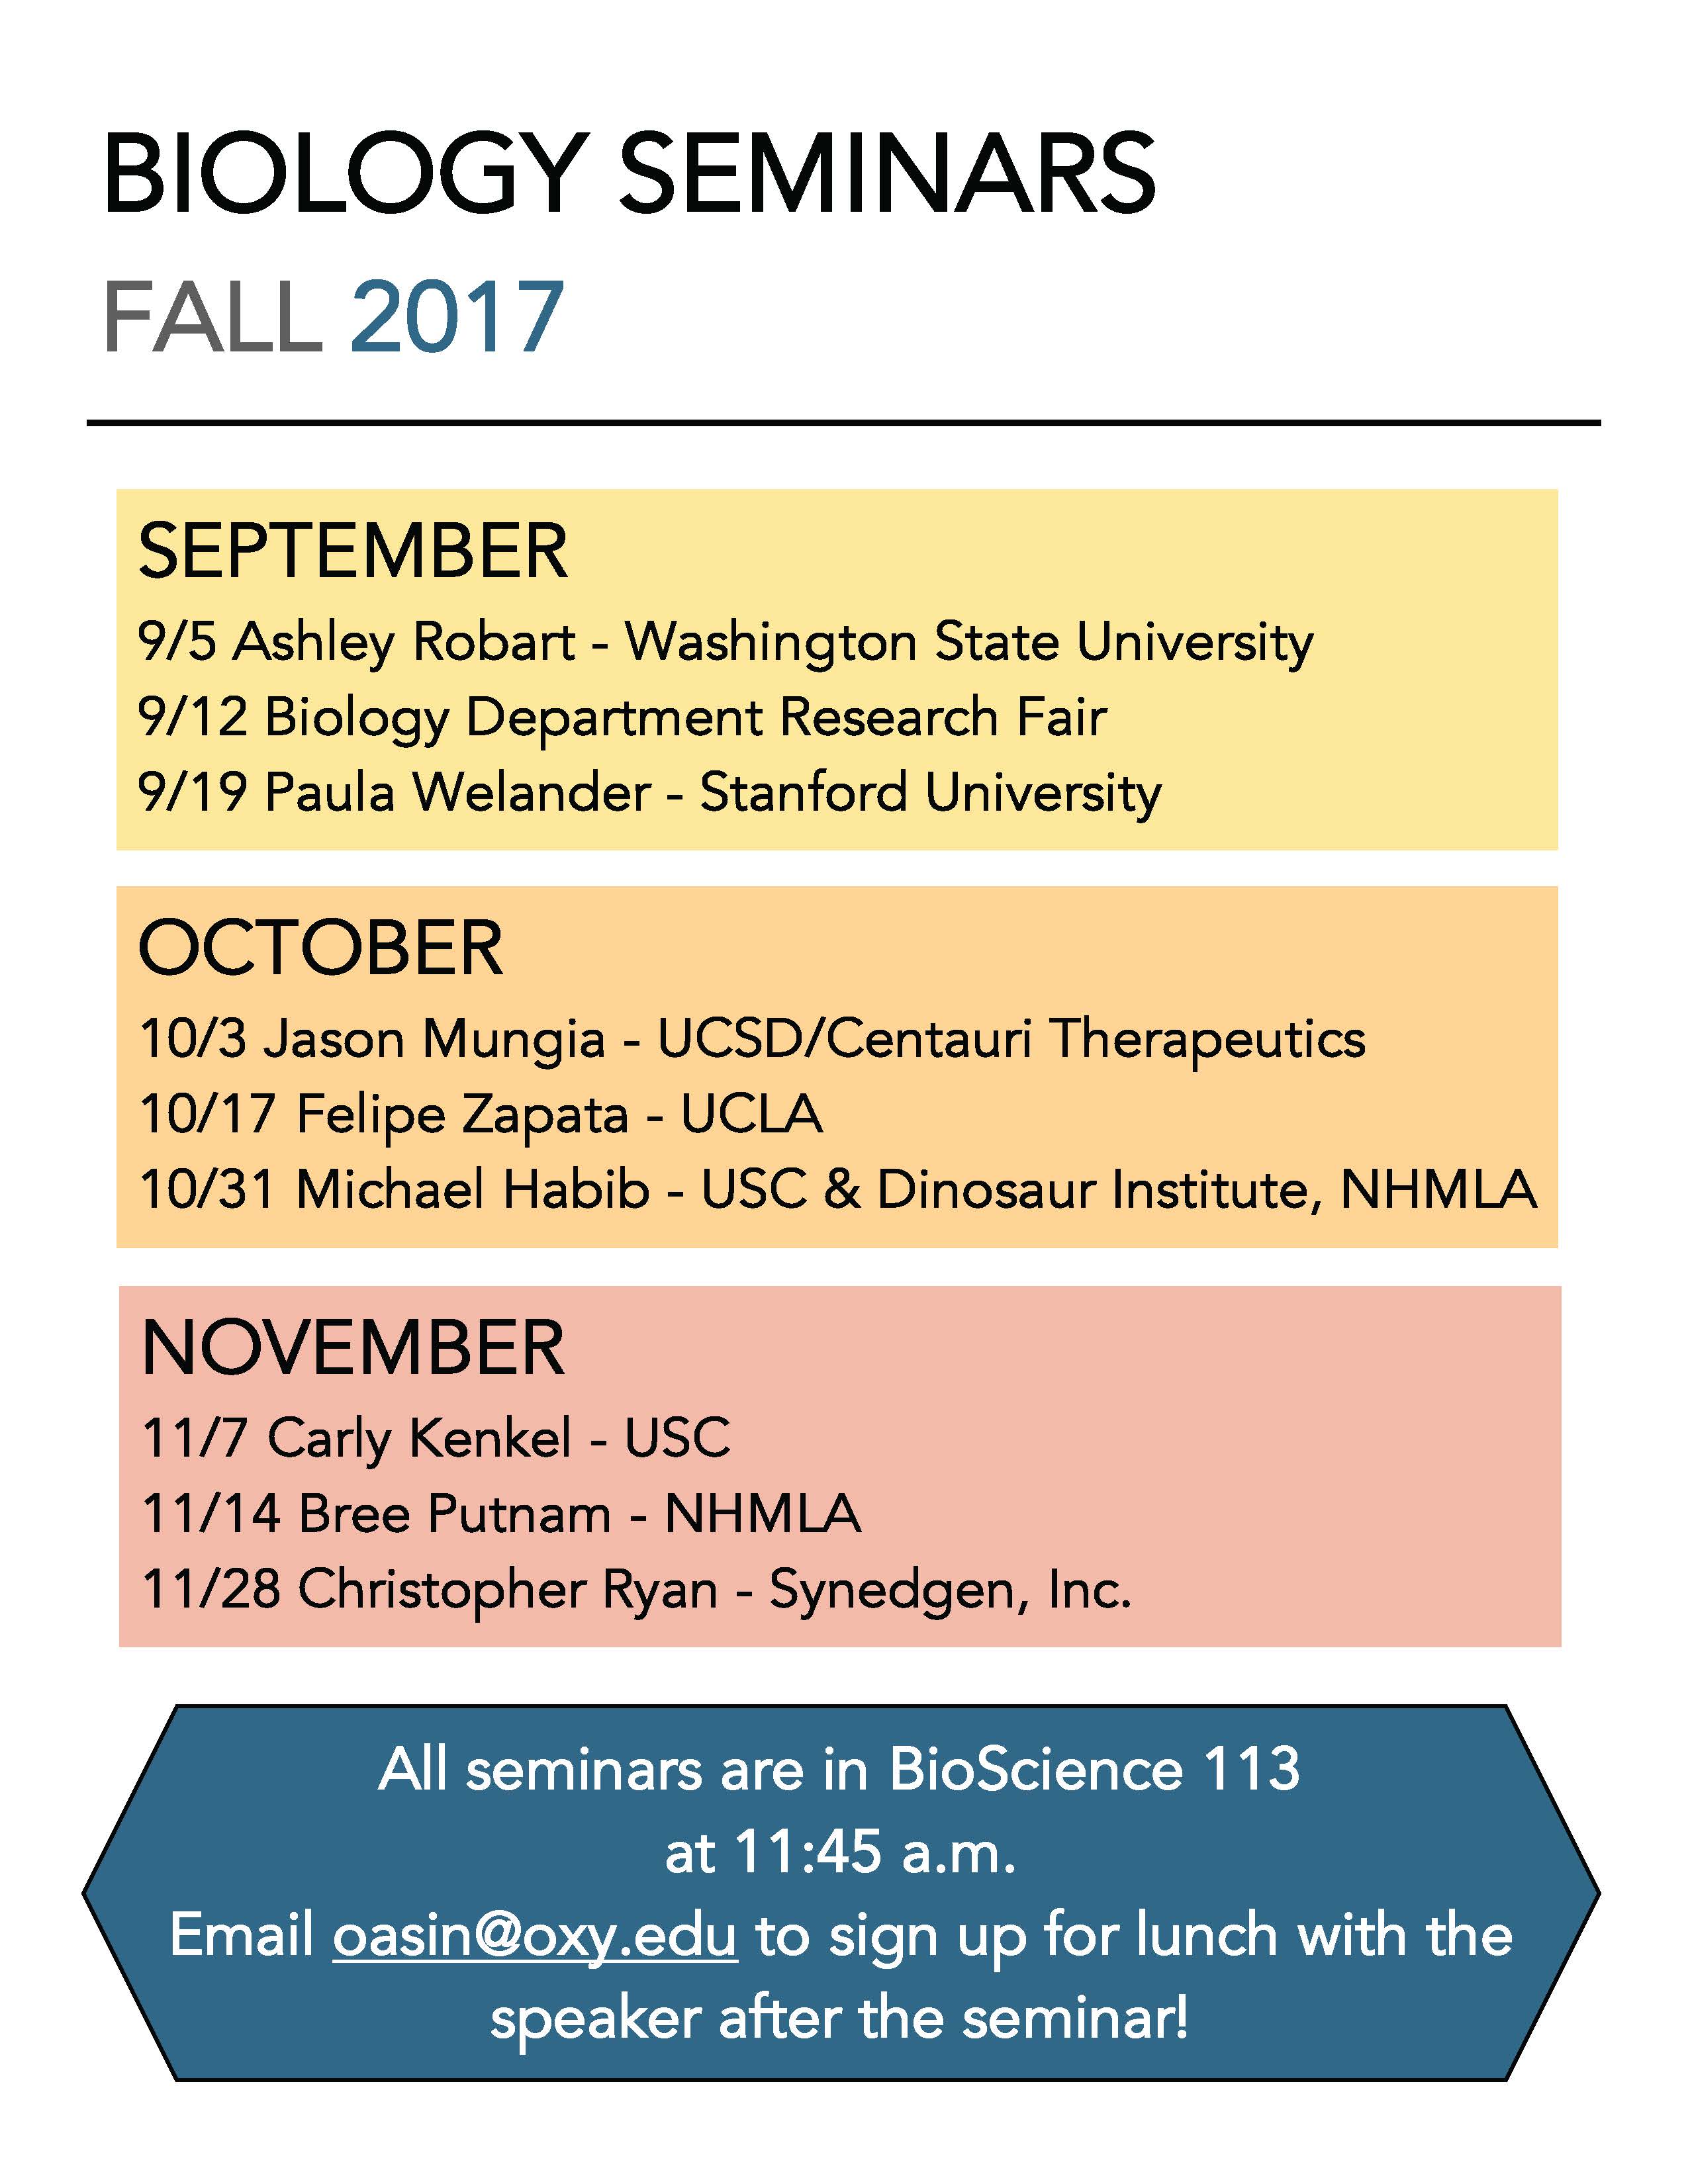 Image for Fall 2017 Biology Seminar Series